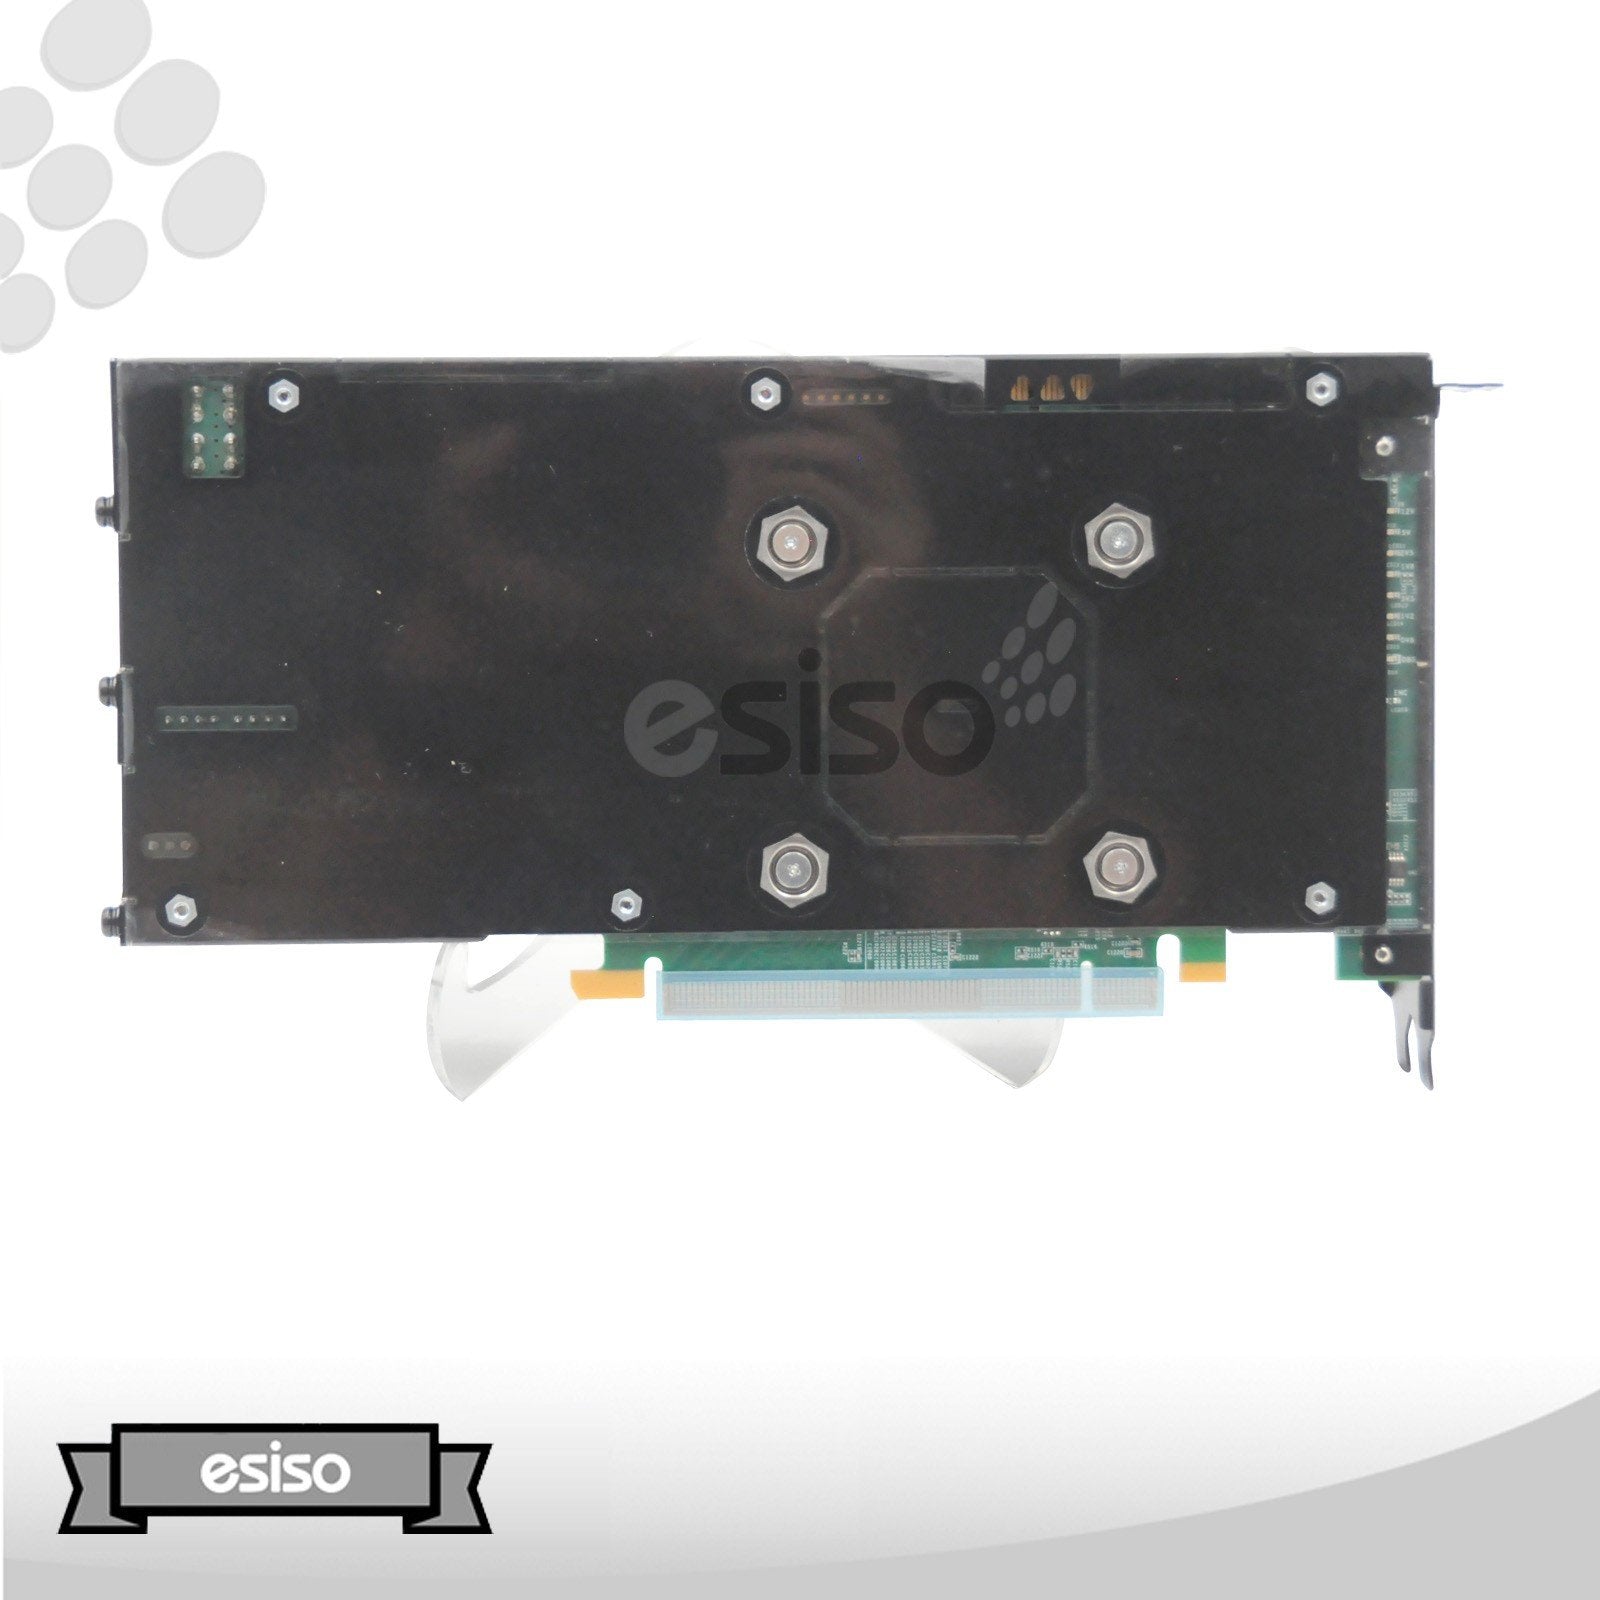 HL-100-08 HABANA GOYA DUAL-SLOT PCIE INFERENCE CARD (PASSIVE COOLING)